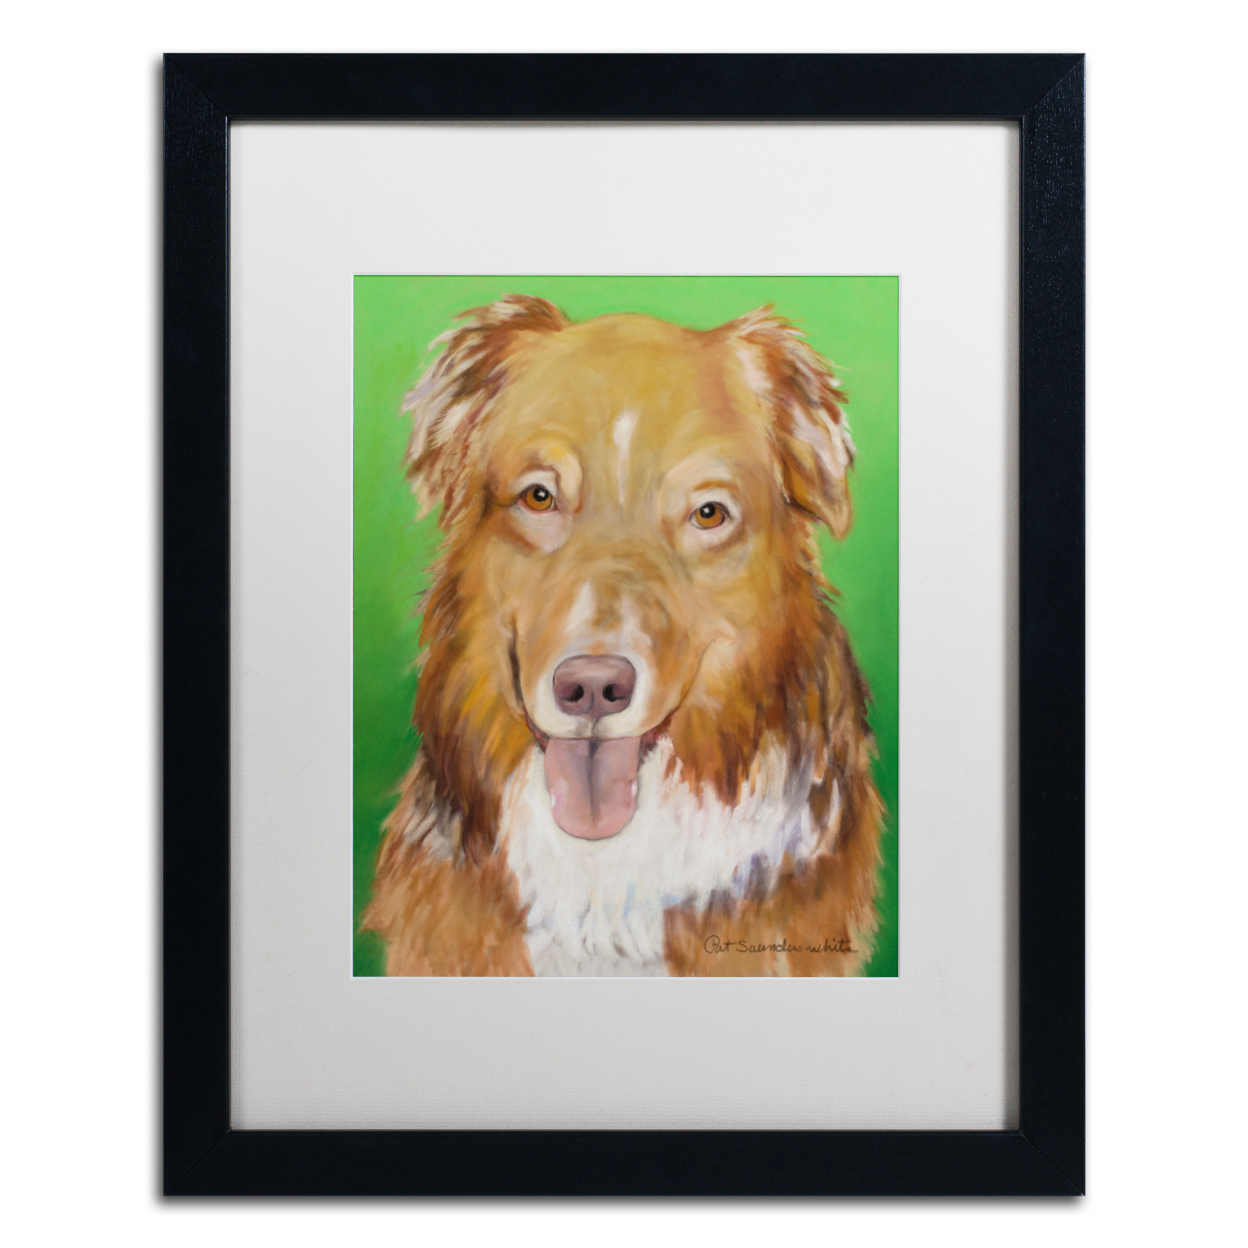 Pat Saunders-White 'Dog On Green' Black Wooden Framed Art 18 X 22 Inches